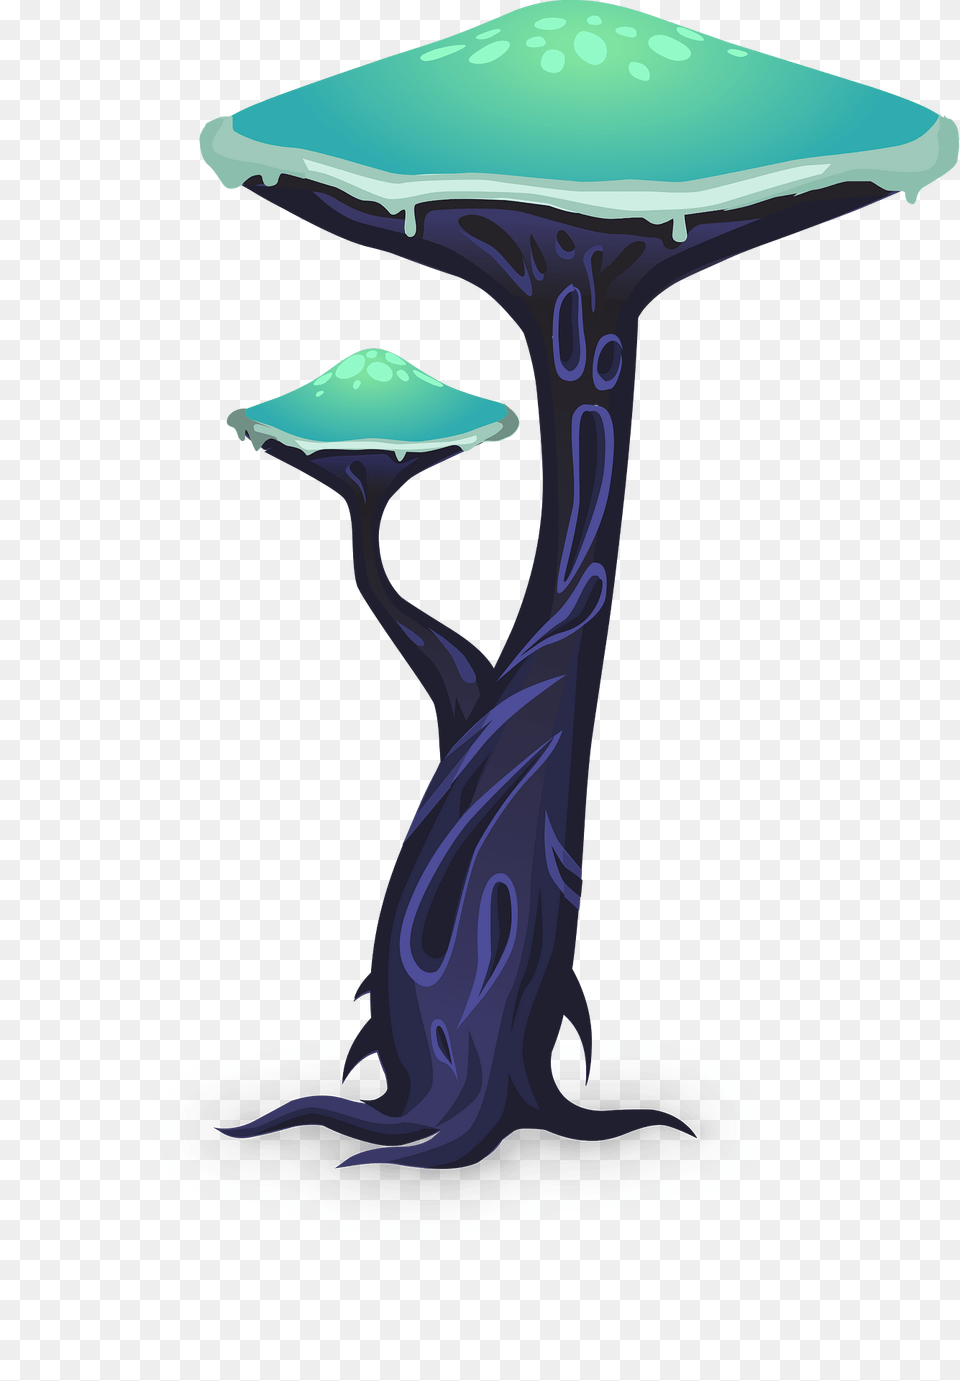 Green Mushroom Tree Clipart, Cross, Symbol Png